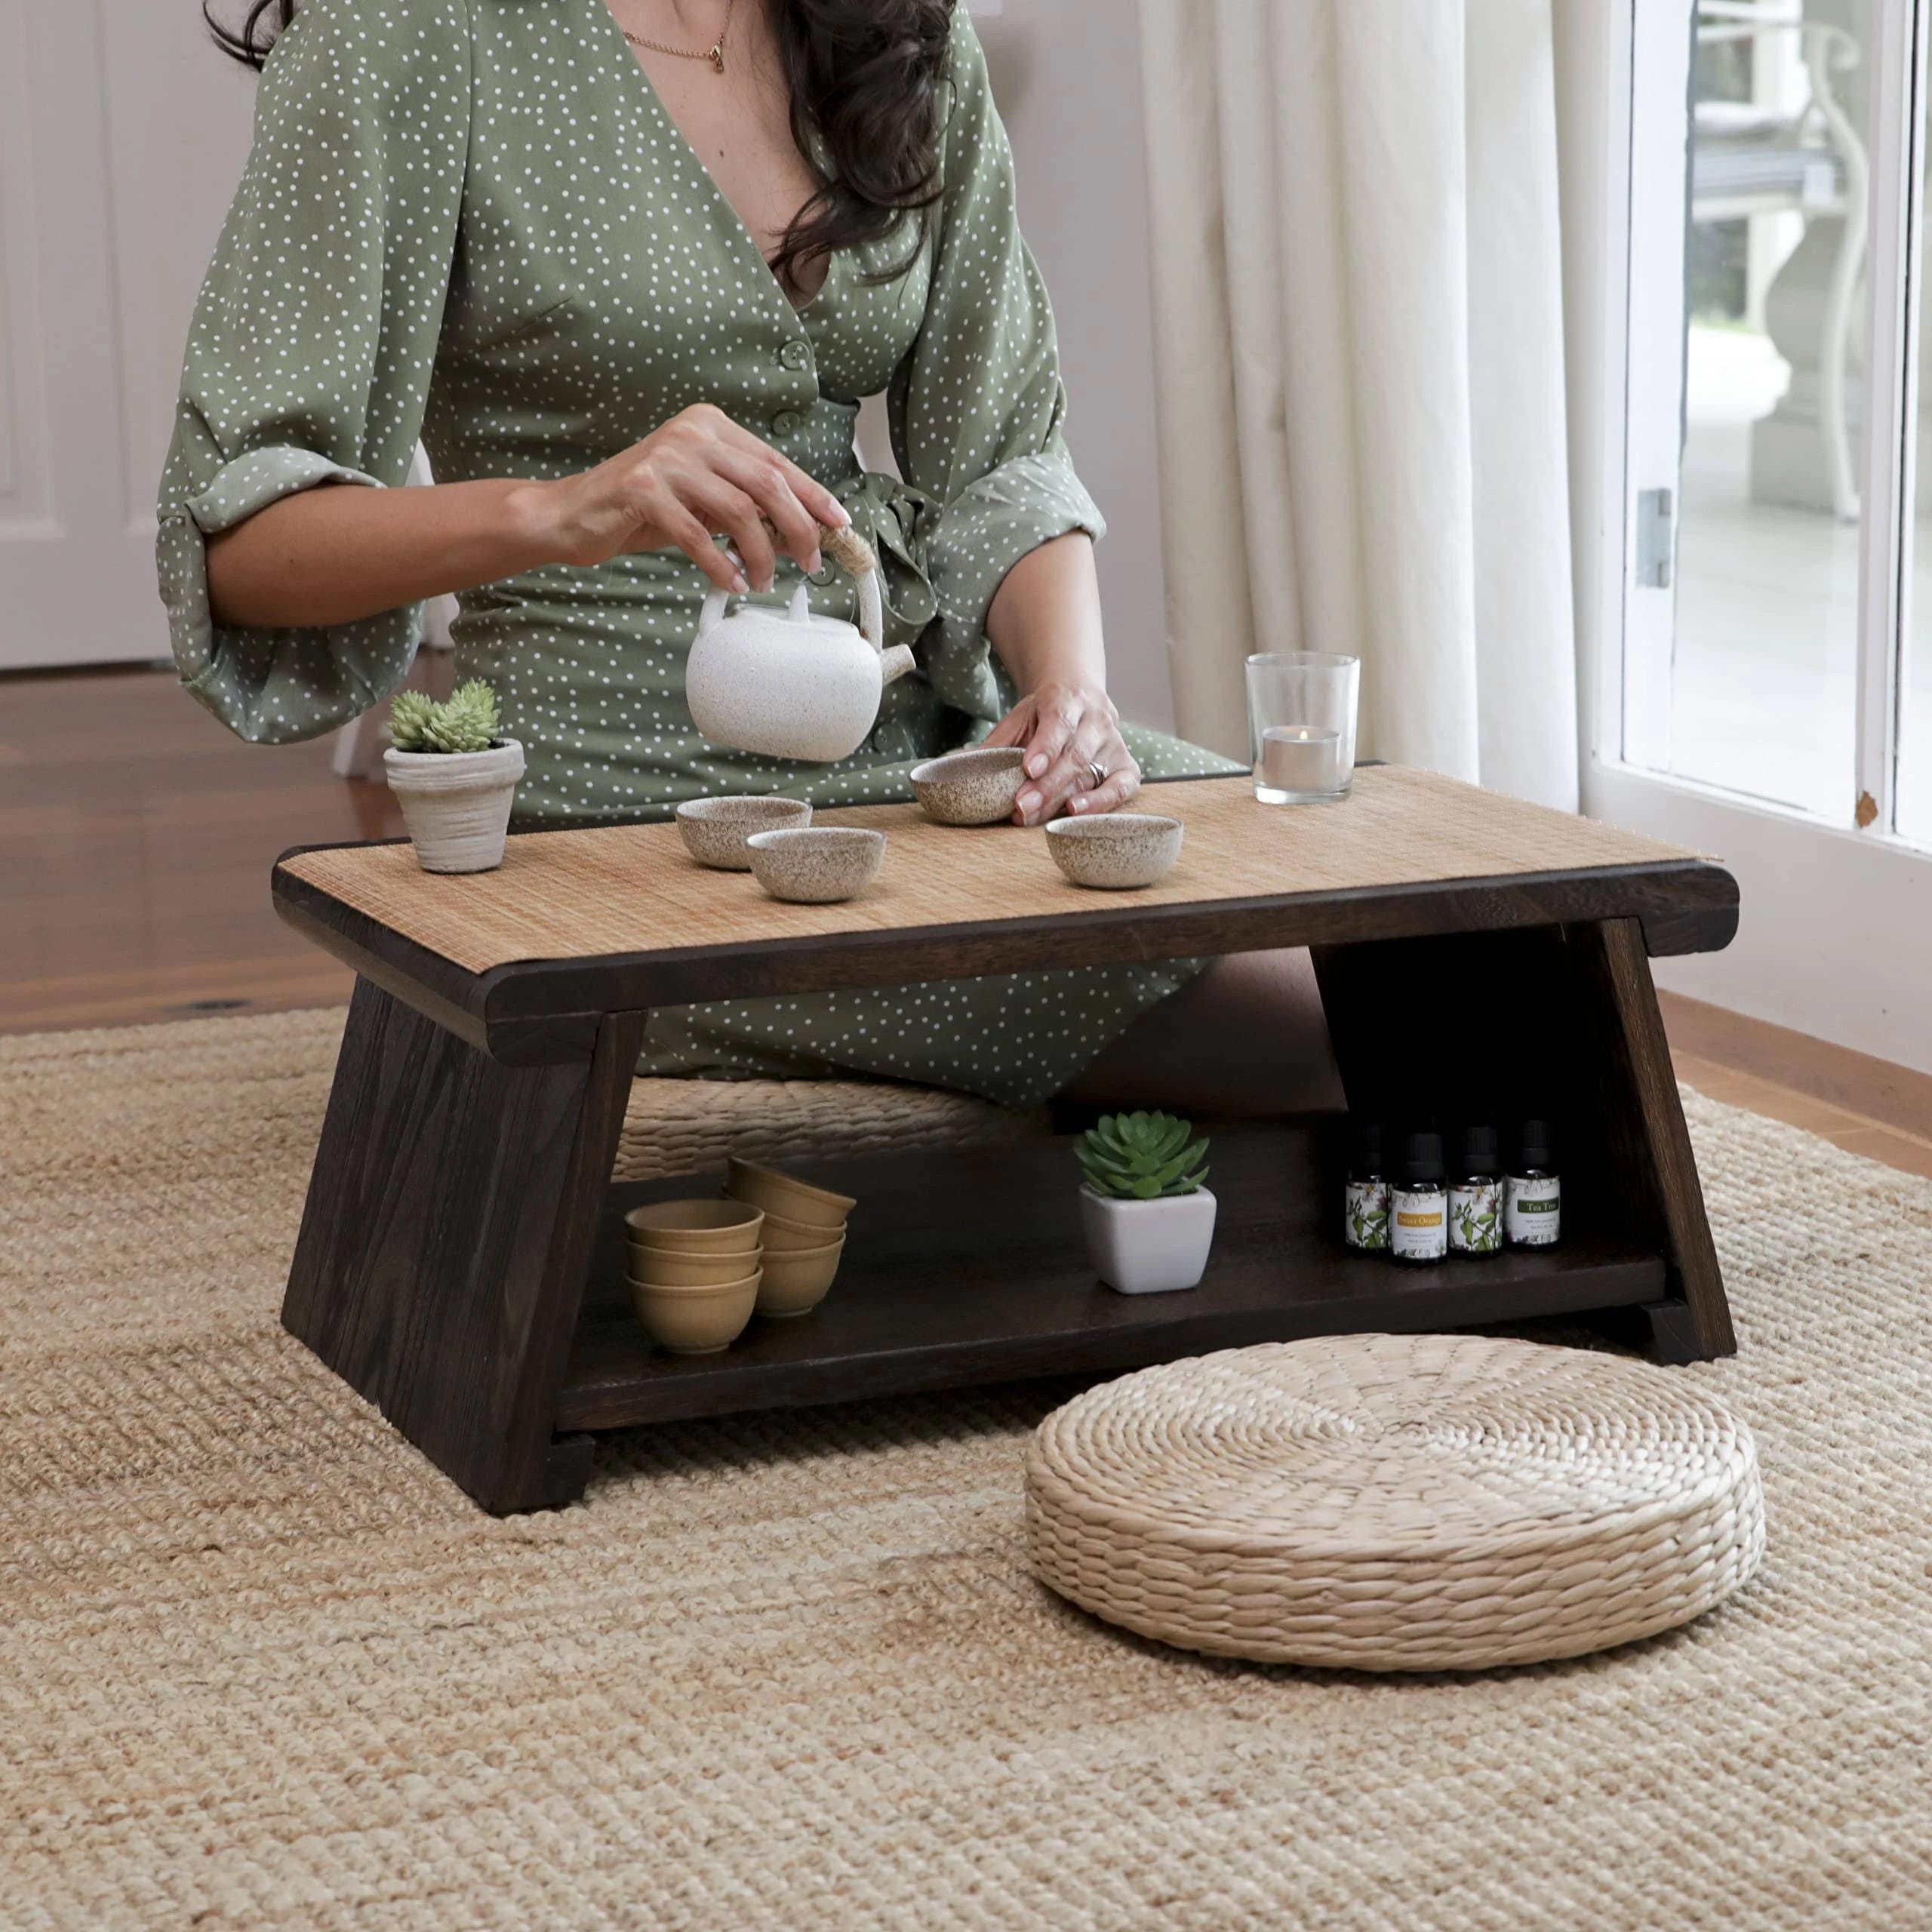 Enso Sensory Uji Premium Japanese Meditation Table | Image